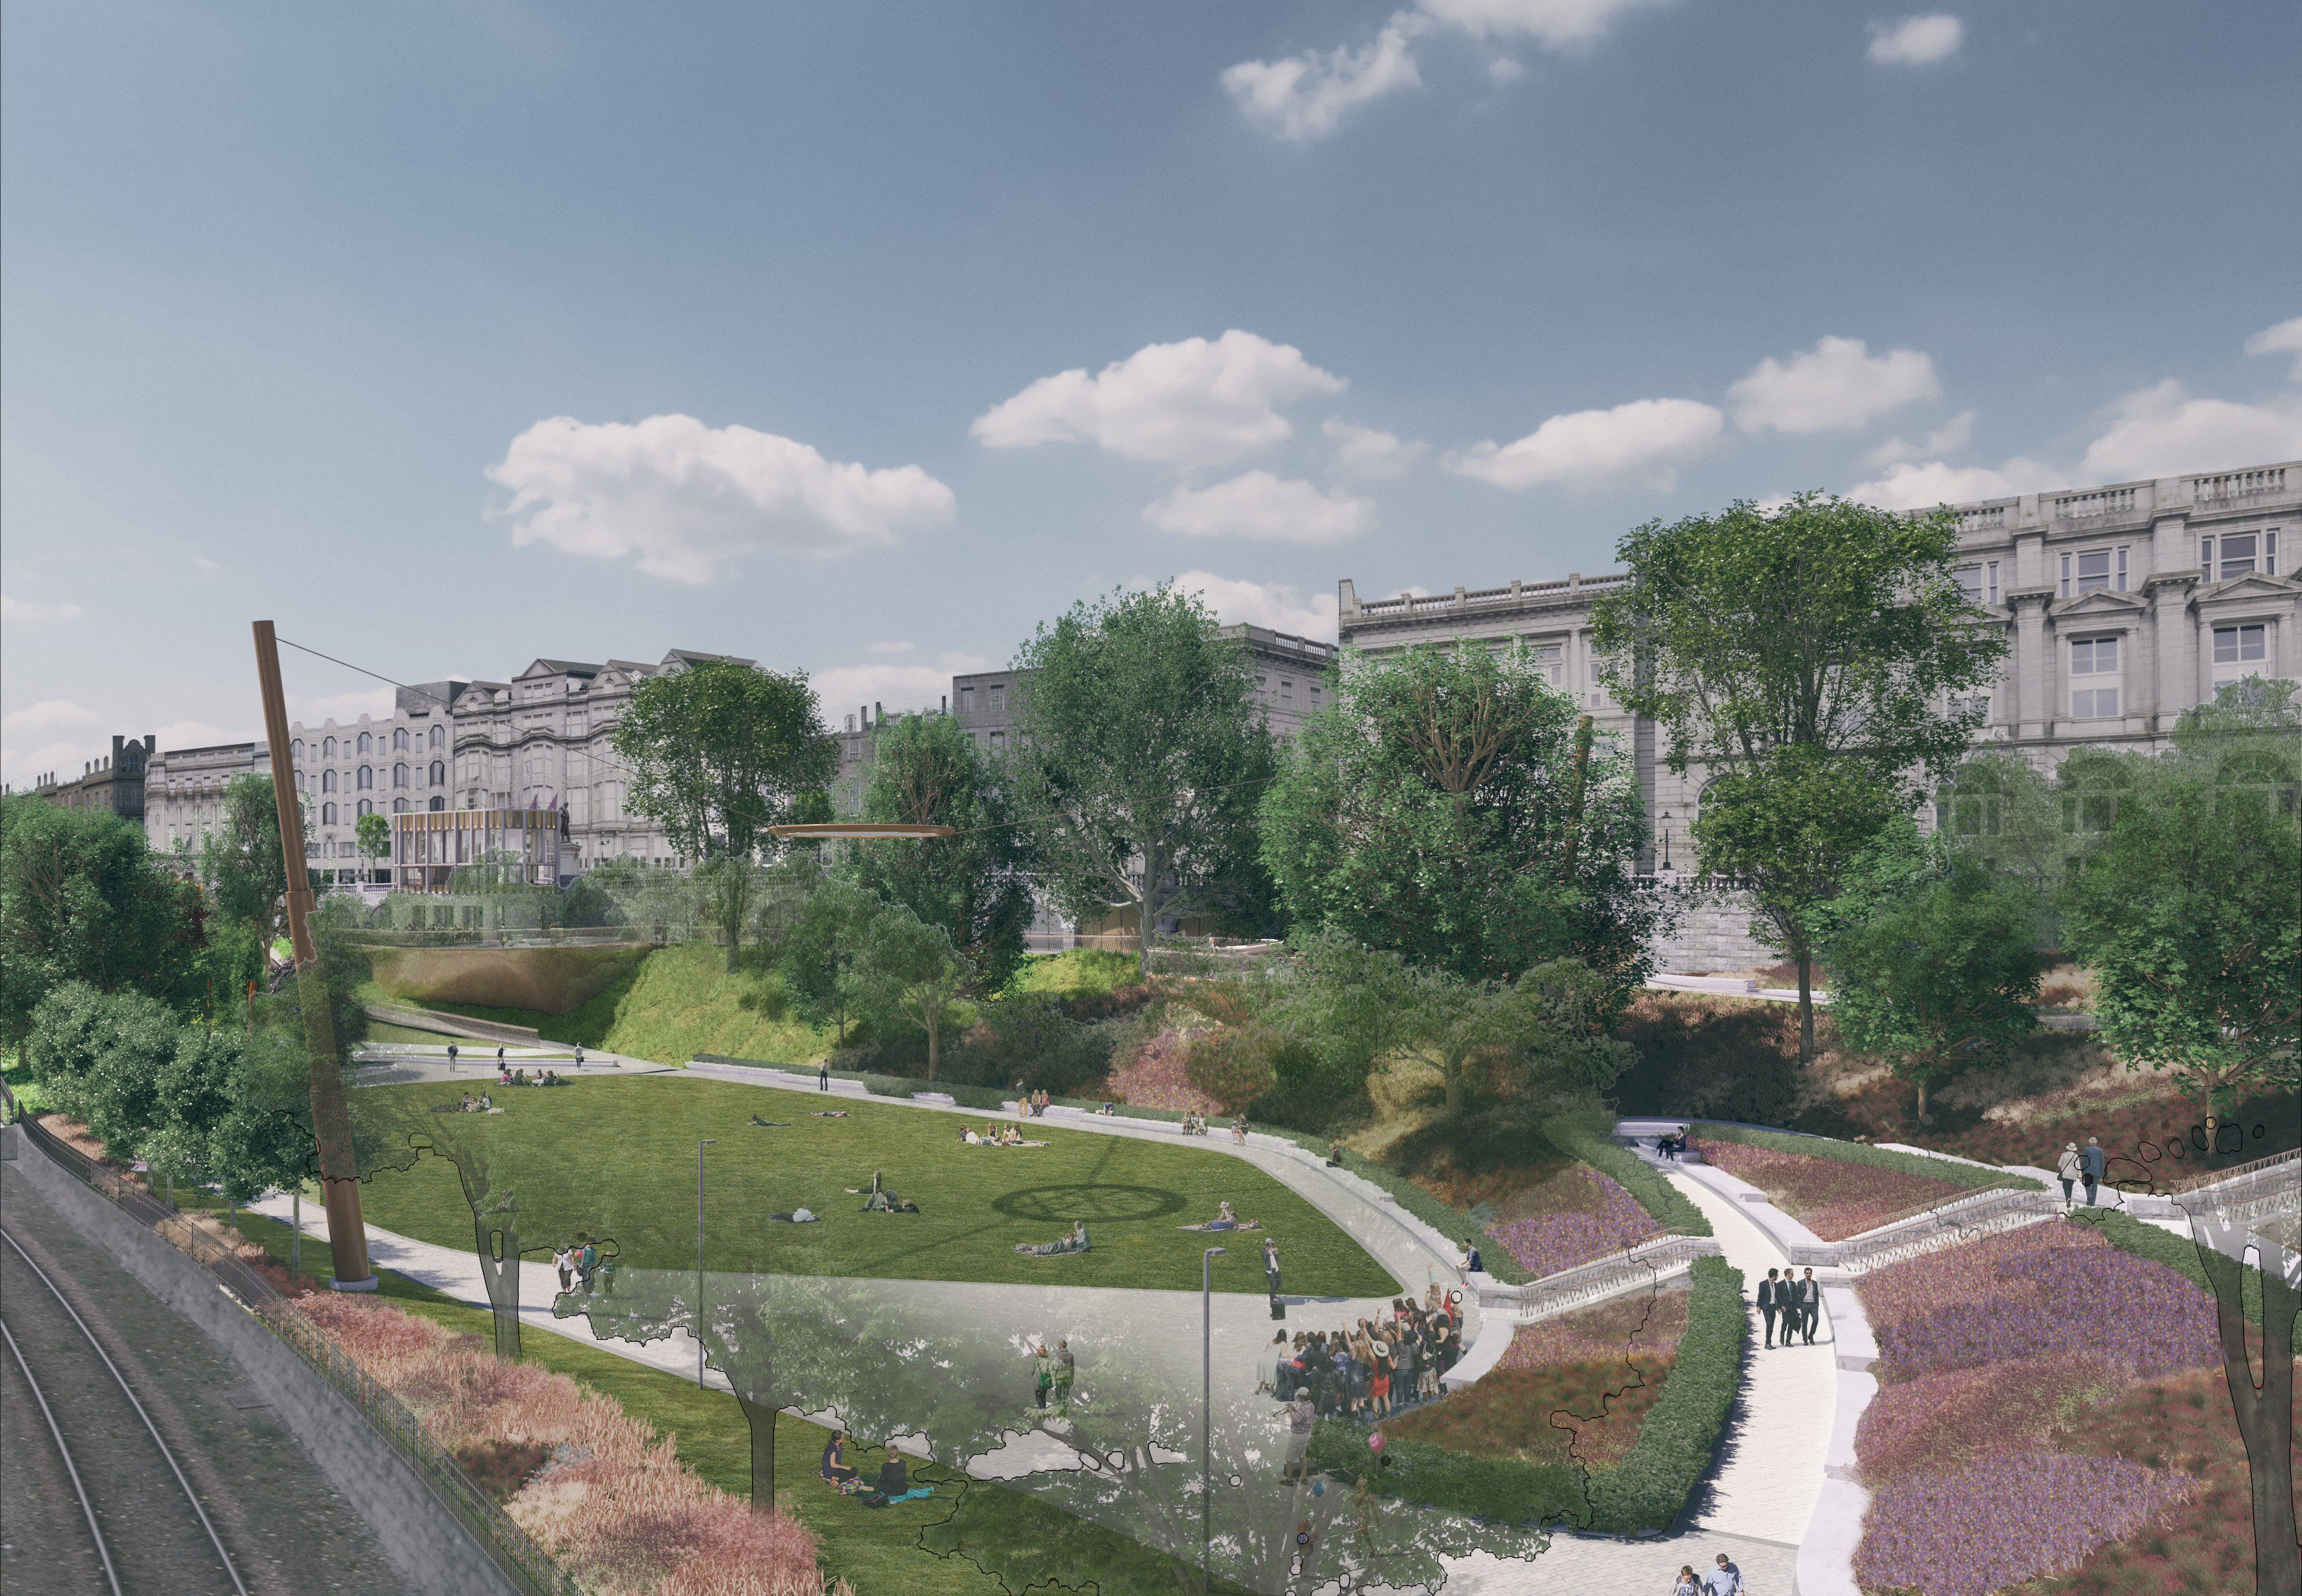 Union Terrace Gardens transformation to begin next month